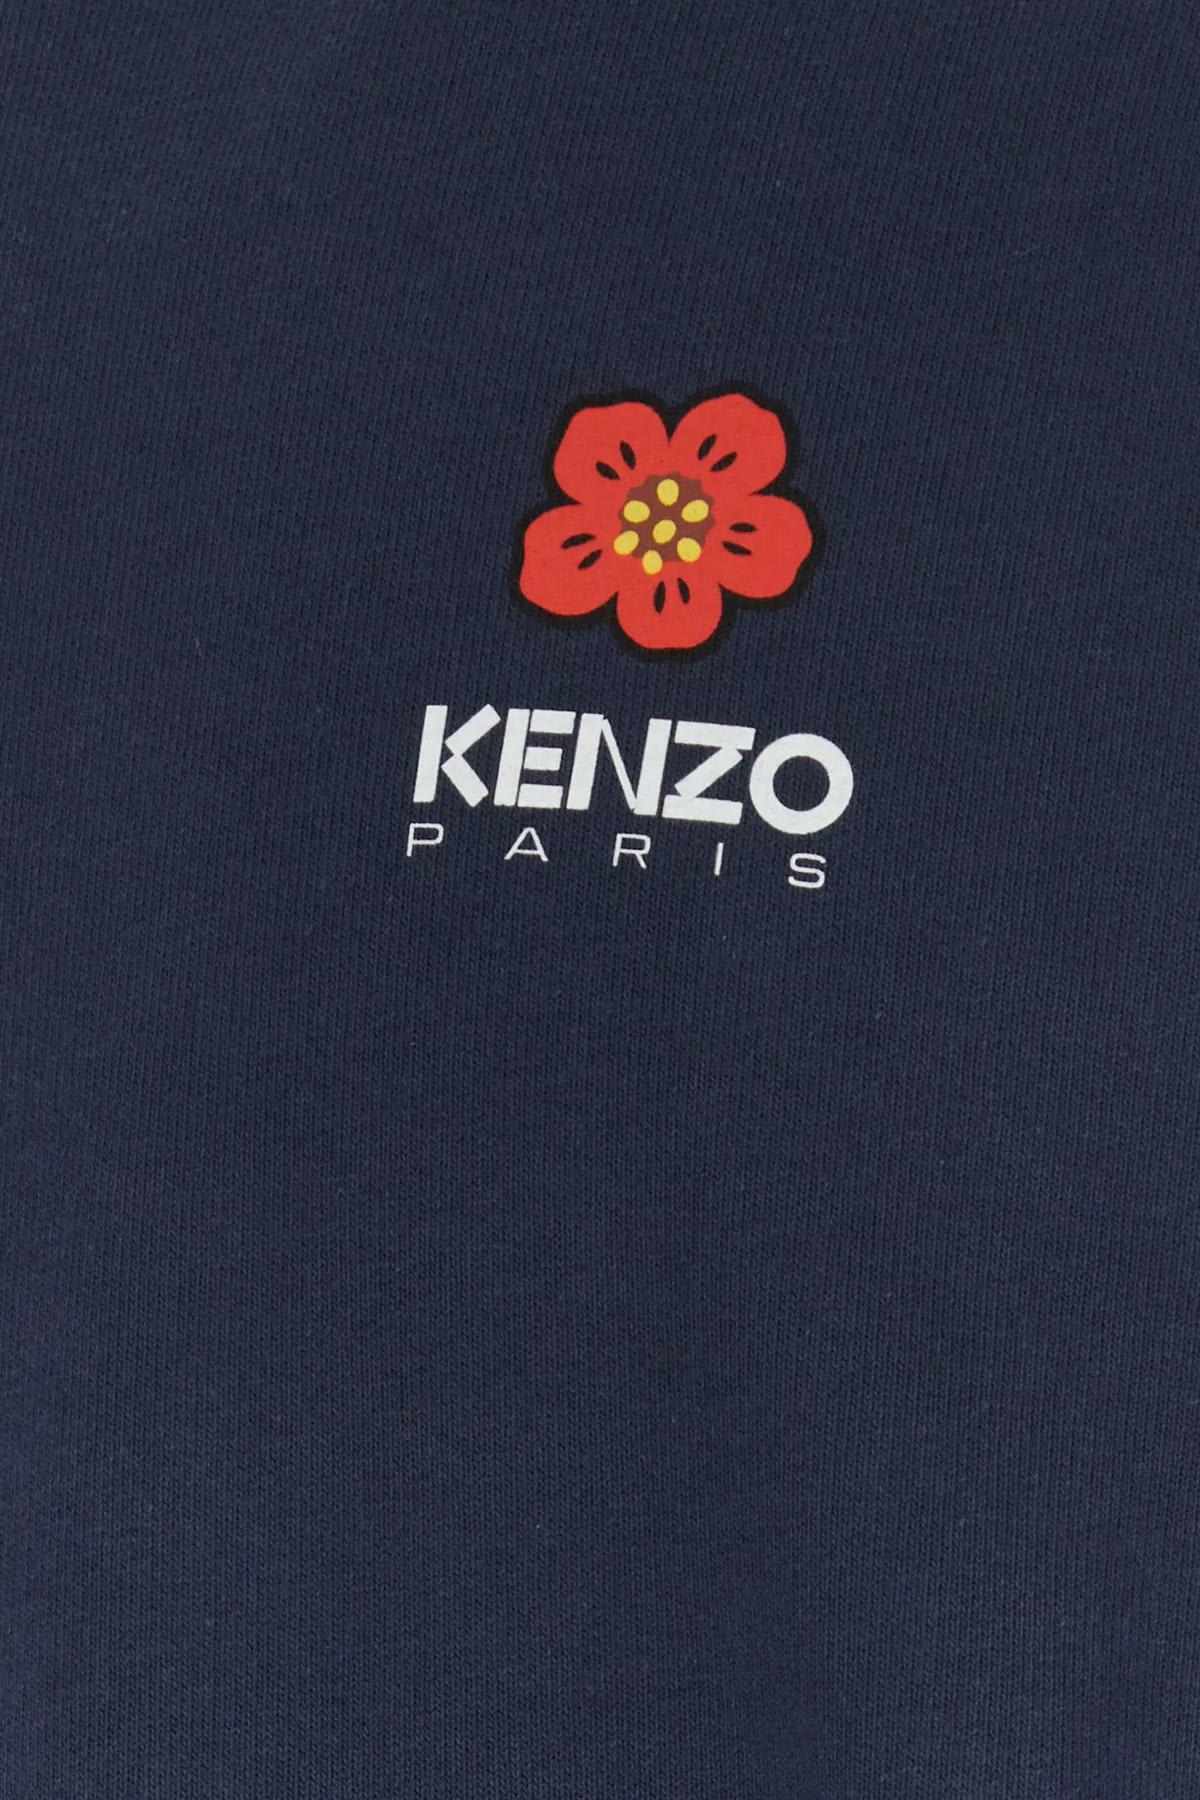 Shop Kenzo Navy Blue Stretch Cotton Oversize Sweatshirt